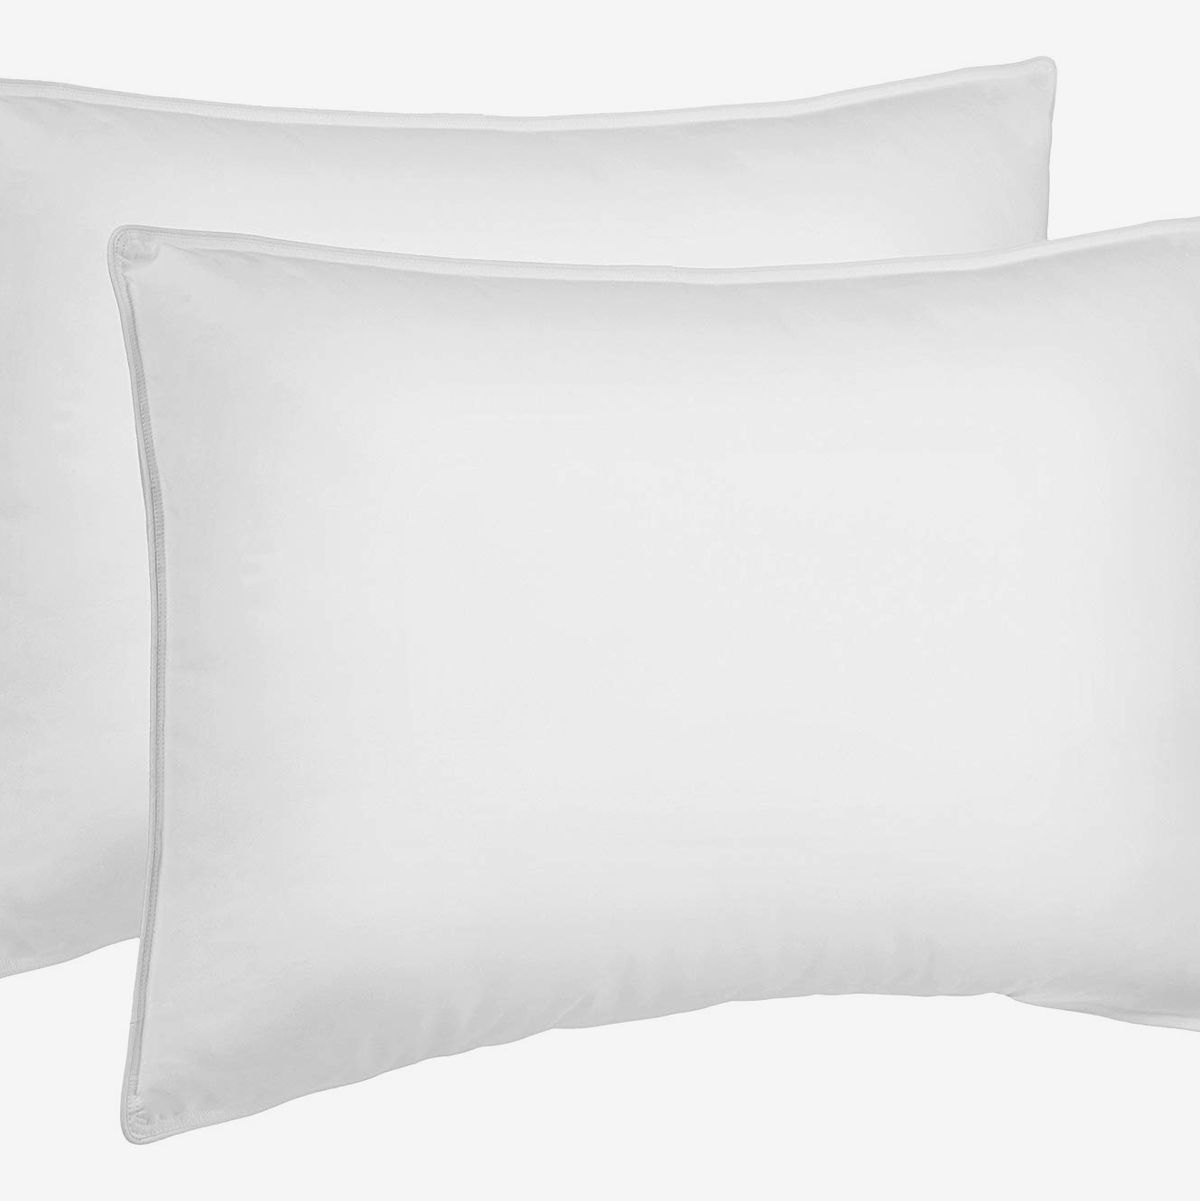 king size pillows canada